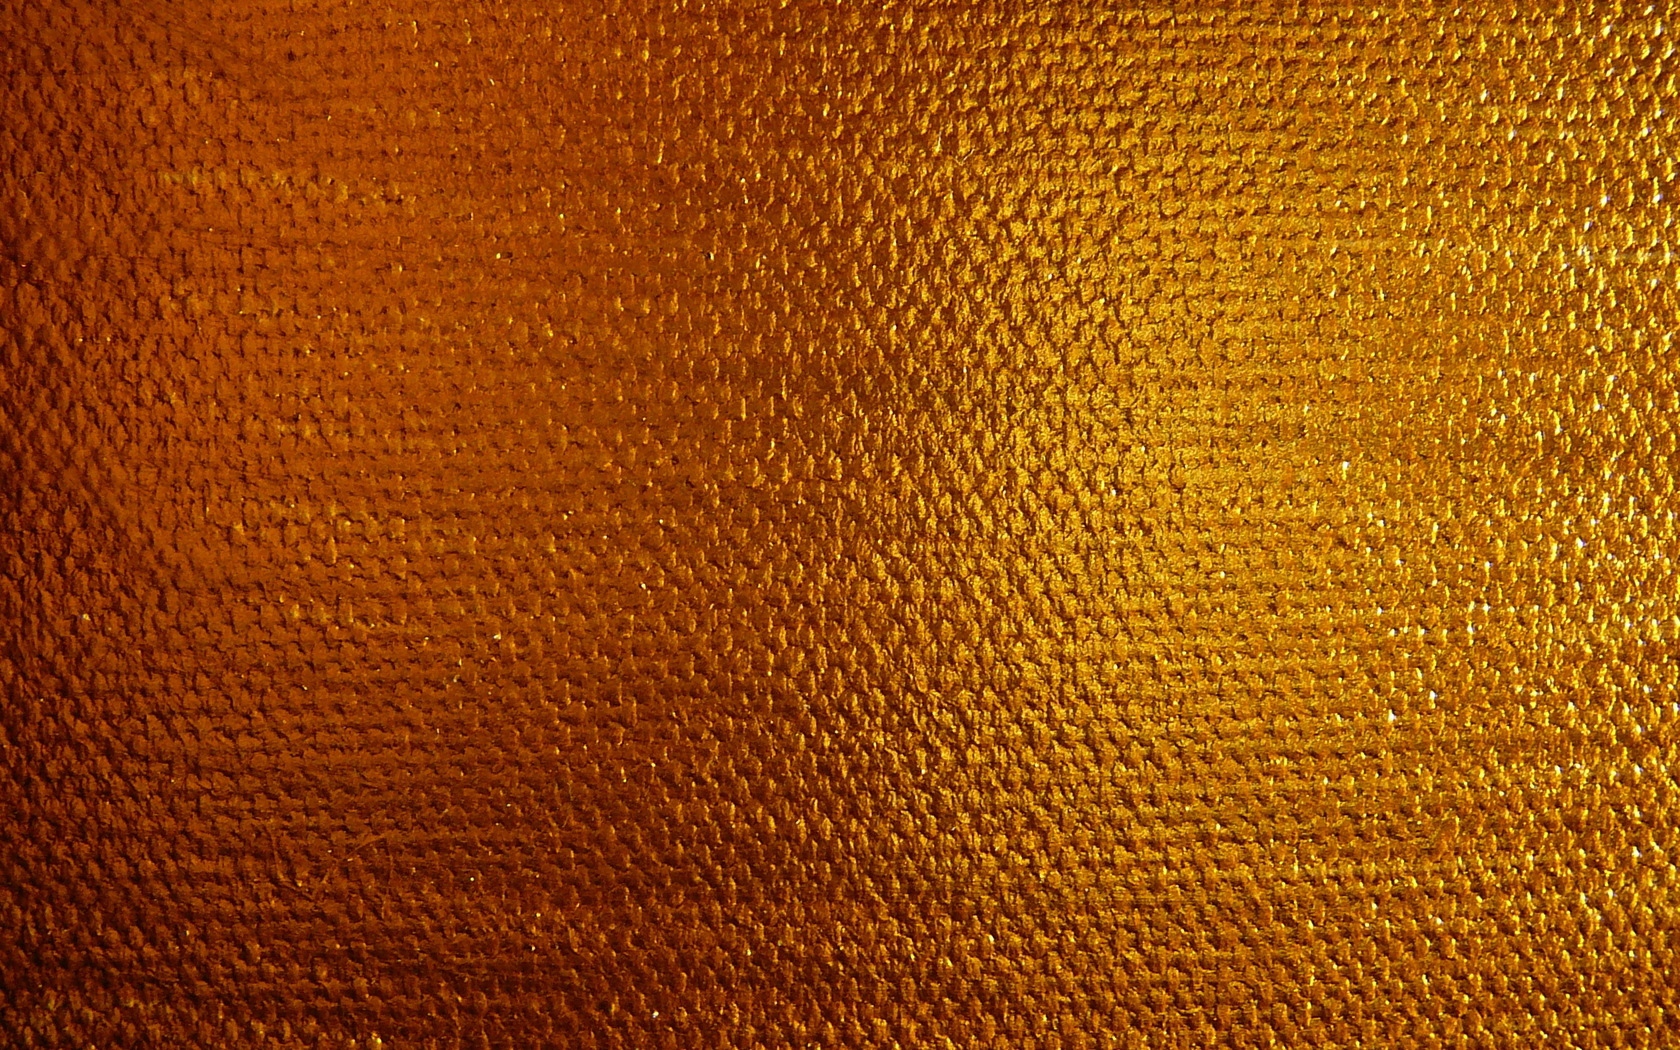 Wallpaper Gold Burlap Cloth S Weaving